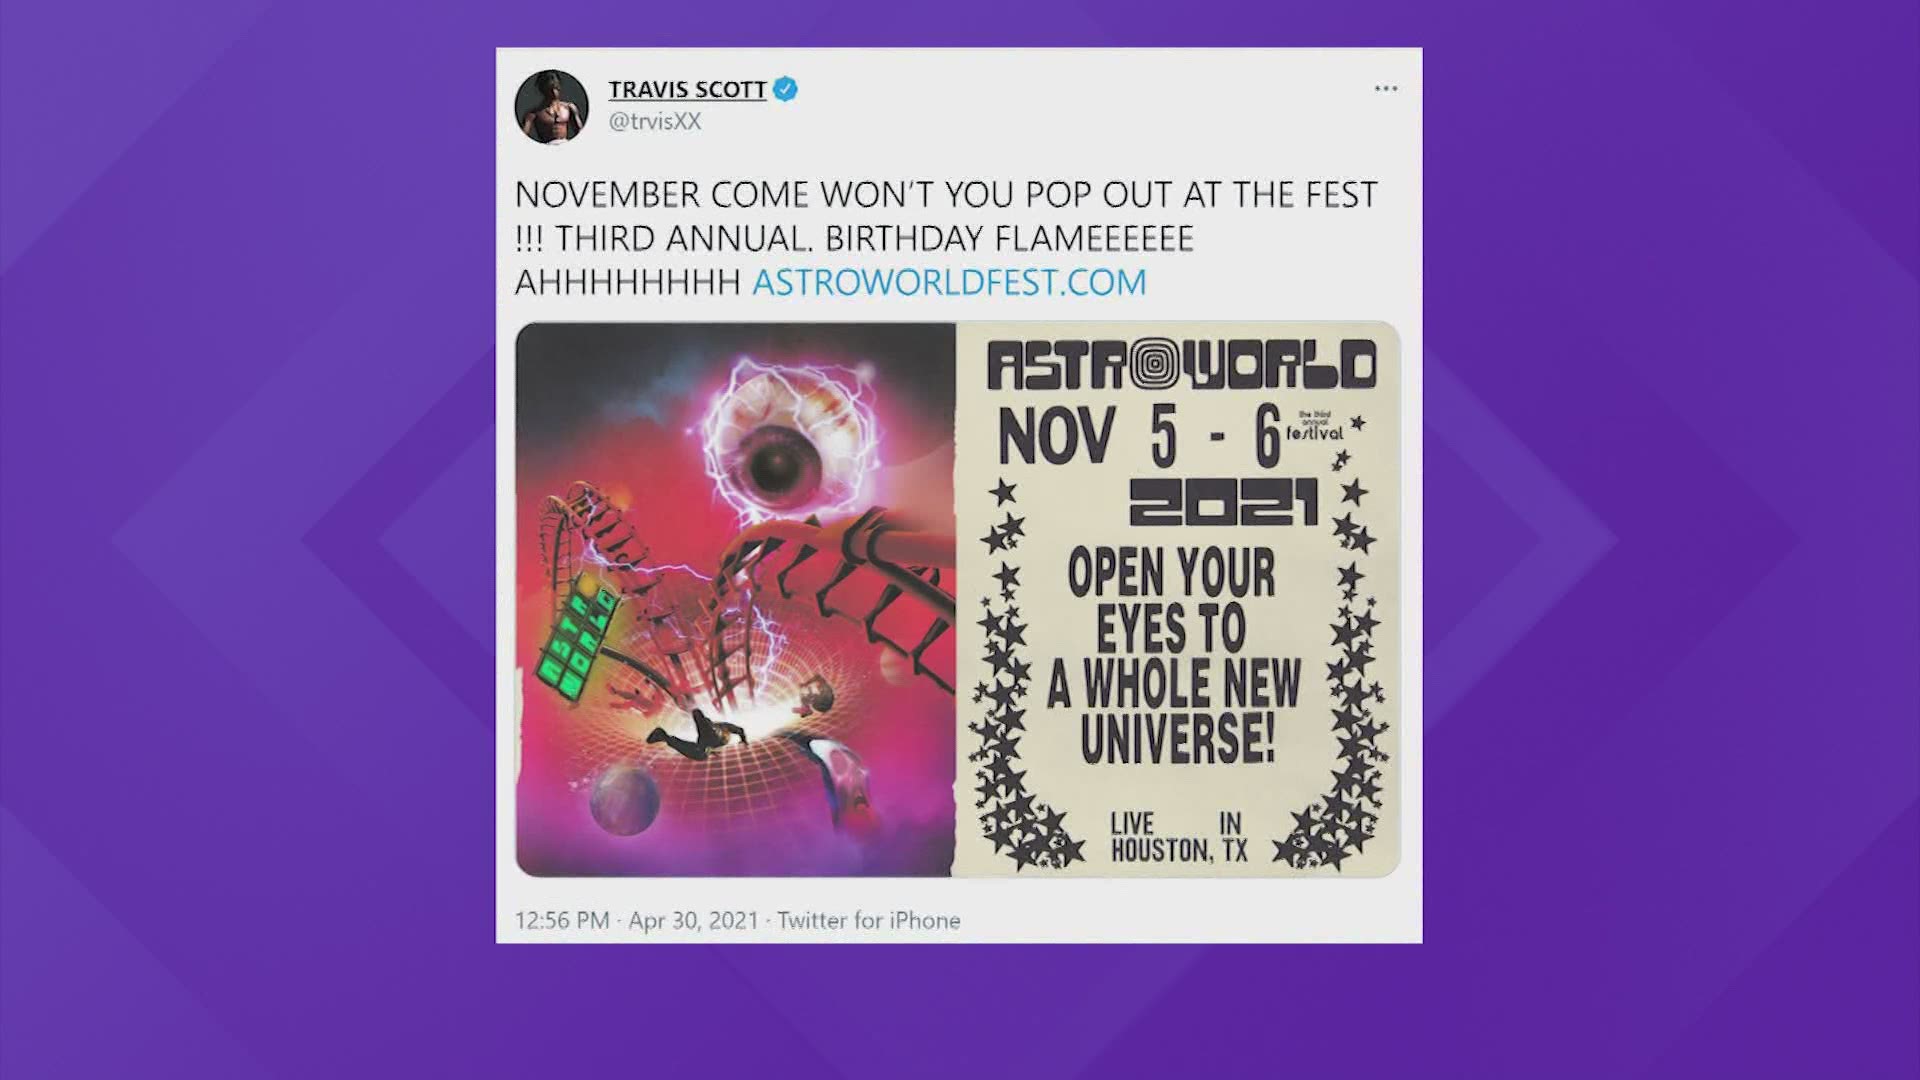 Rapper Travis Scott announced his annual Astroworld music festival is returning to Houston in November.